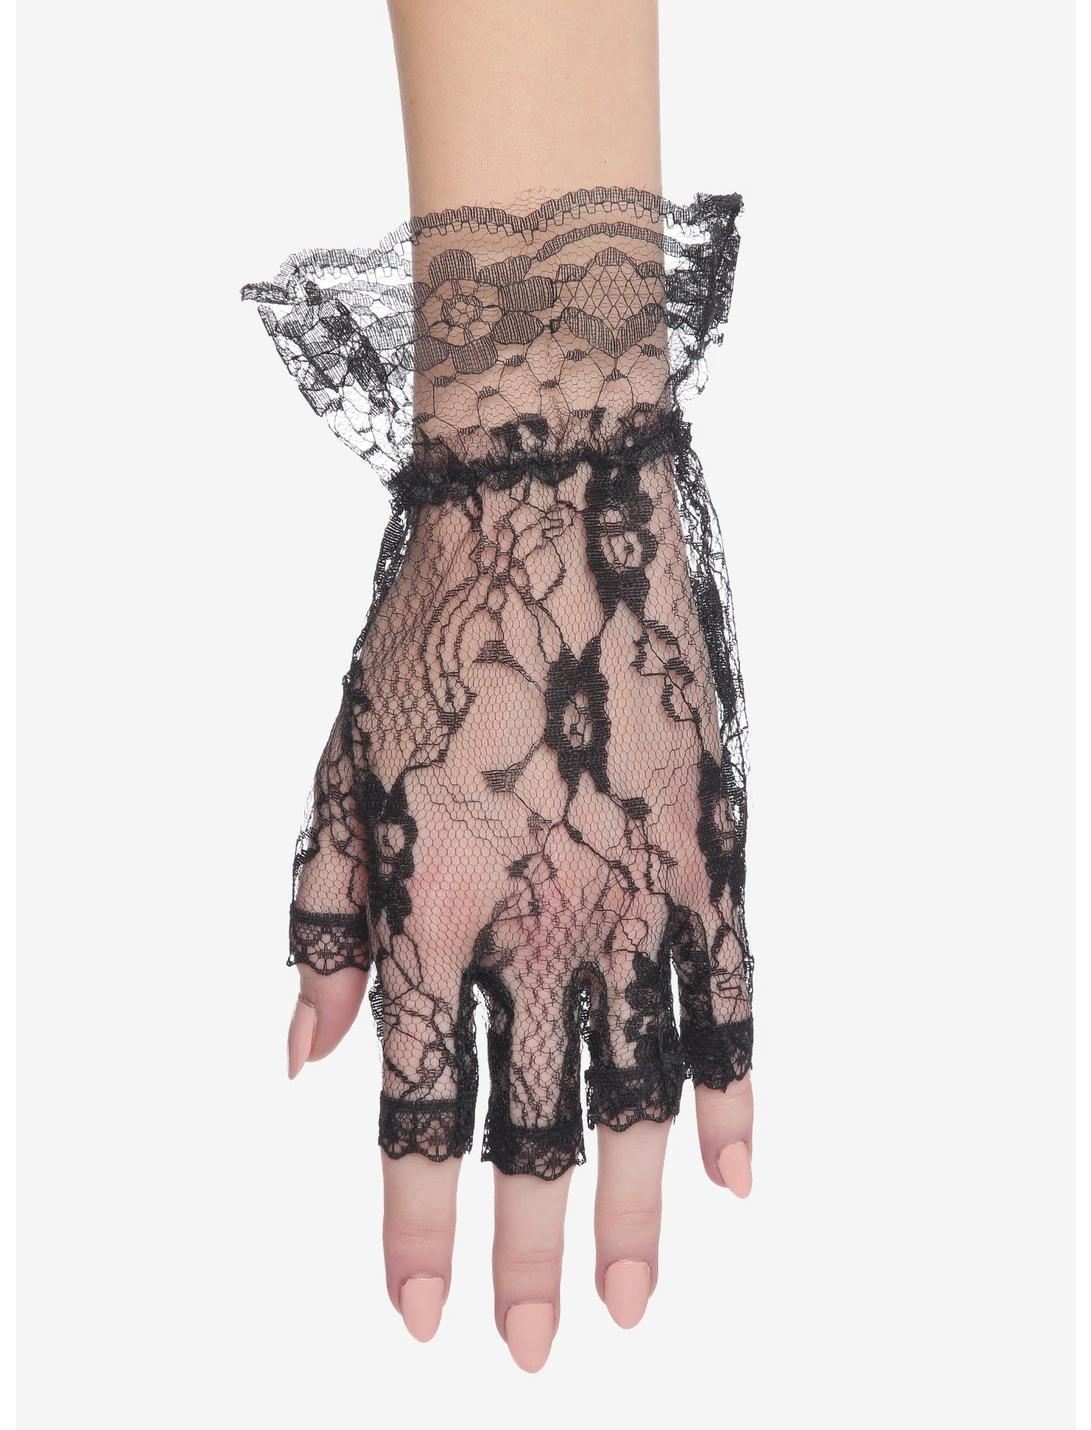 Black Lace Ruffle Fingerless Gloves, , hi-res